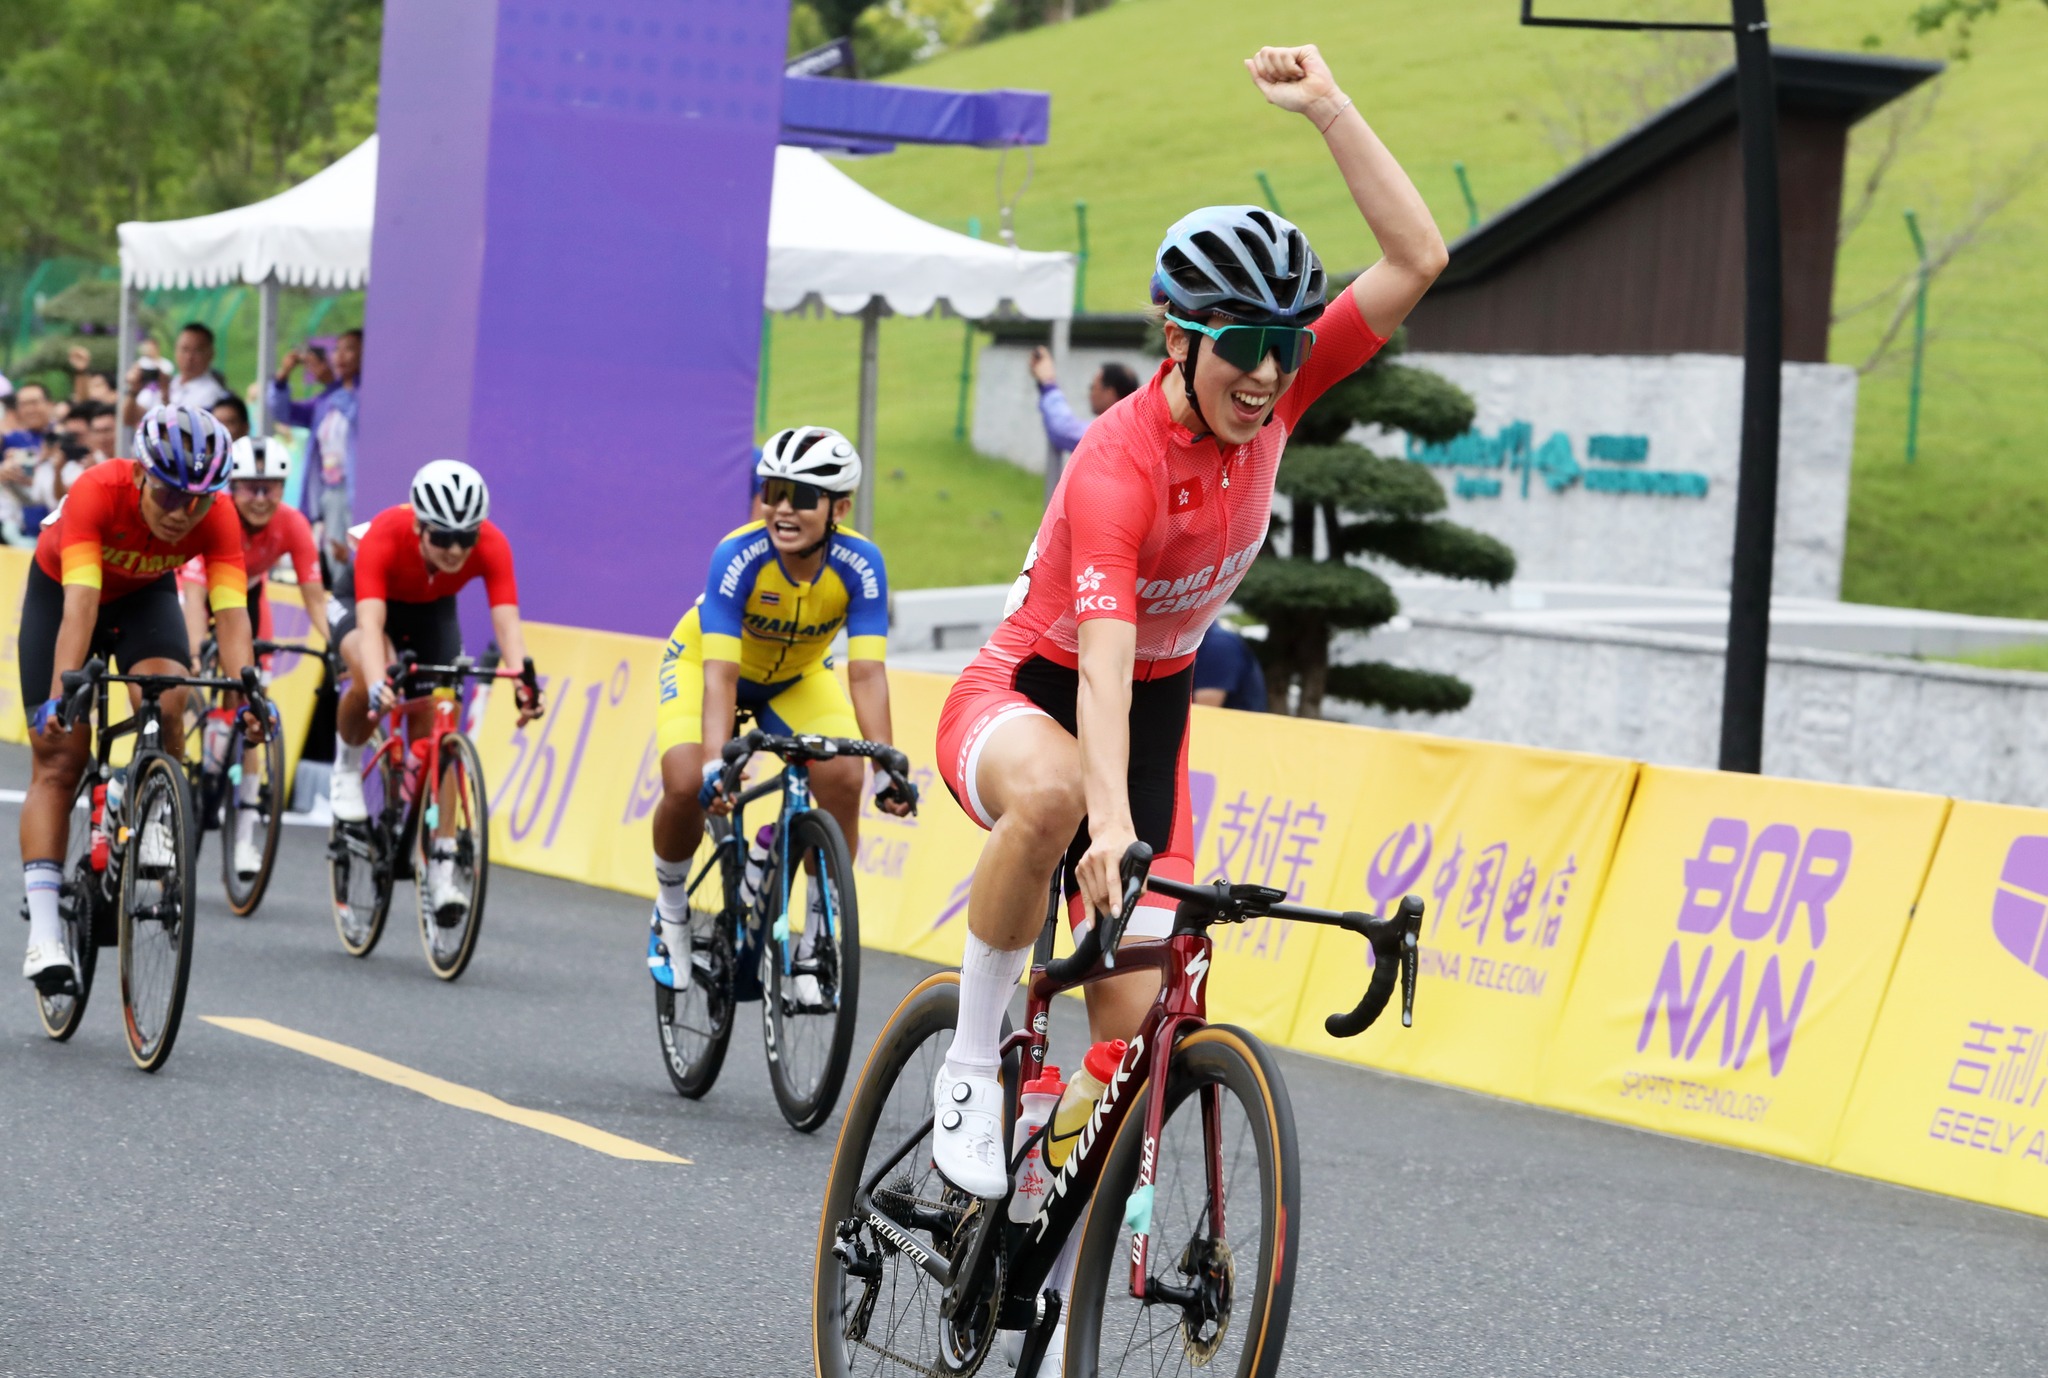 Yang Qianyu wins Hong Kong's first ever gold medal in the women’s cycling road race.